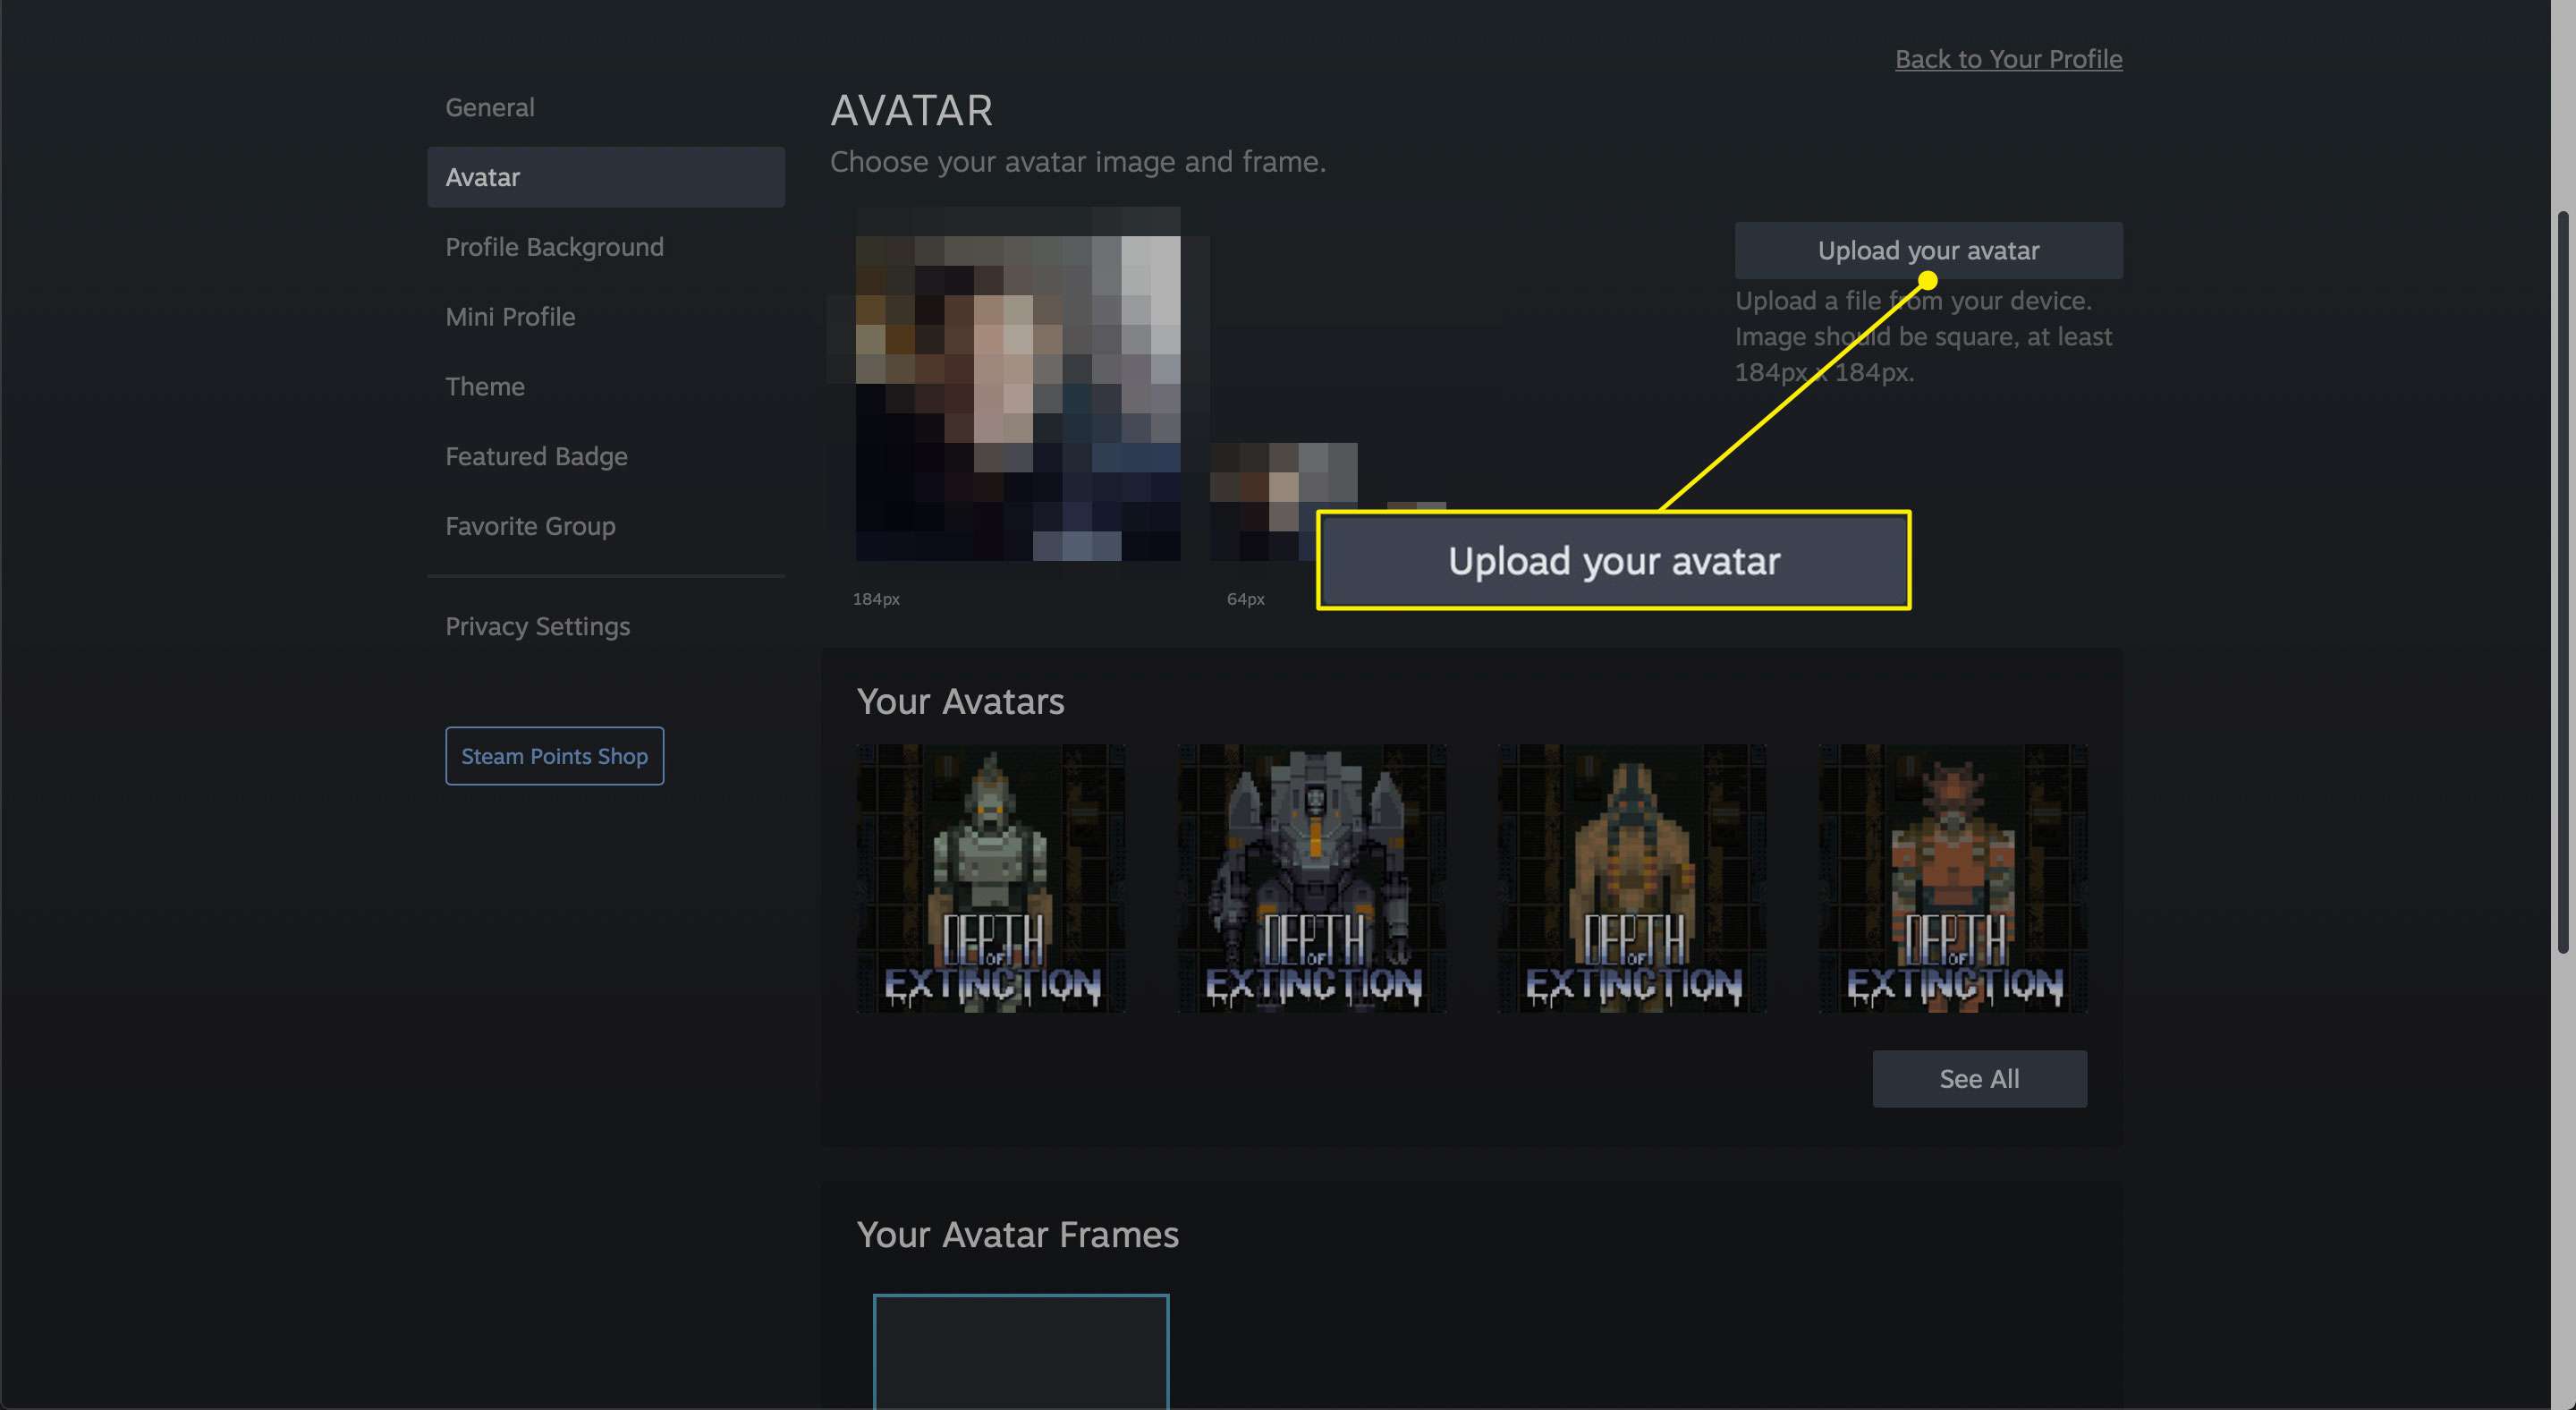 De "Upload je Avatar" knop